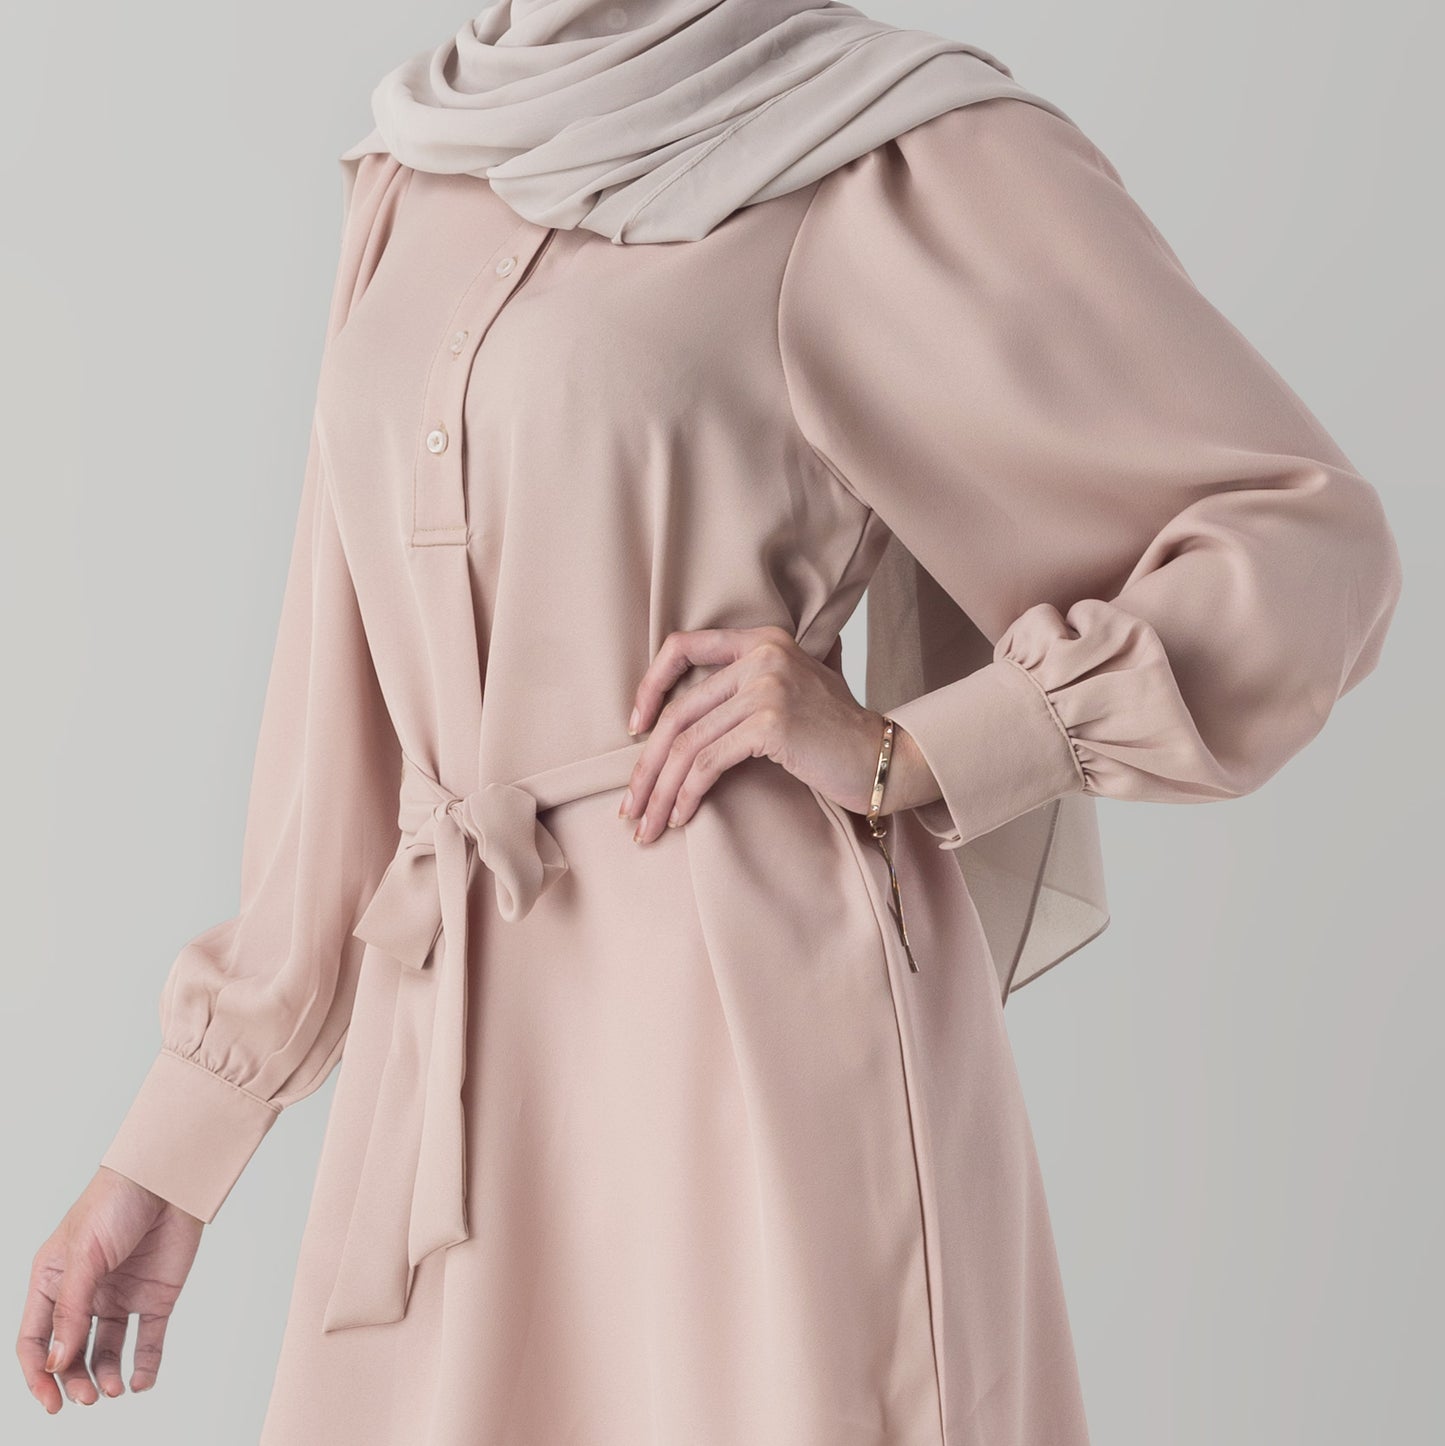 Benhill "Mira" Dress Tunik Wanita Pink 232-39477